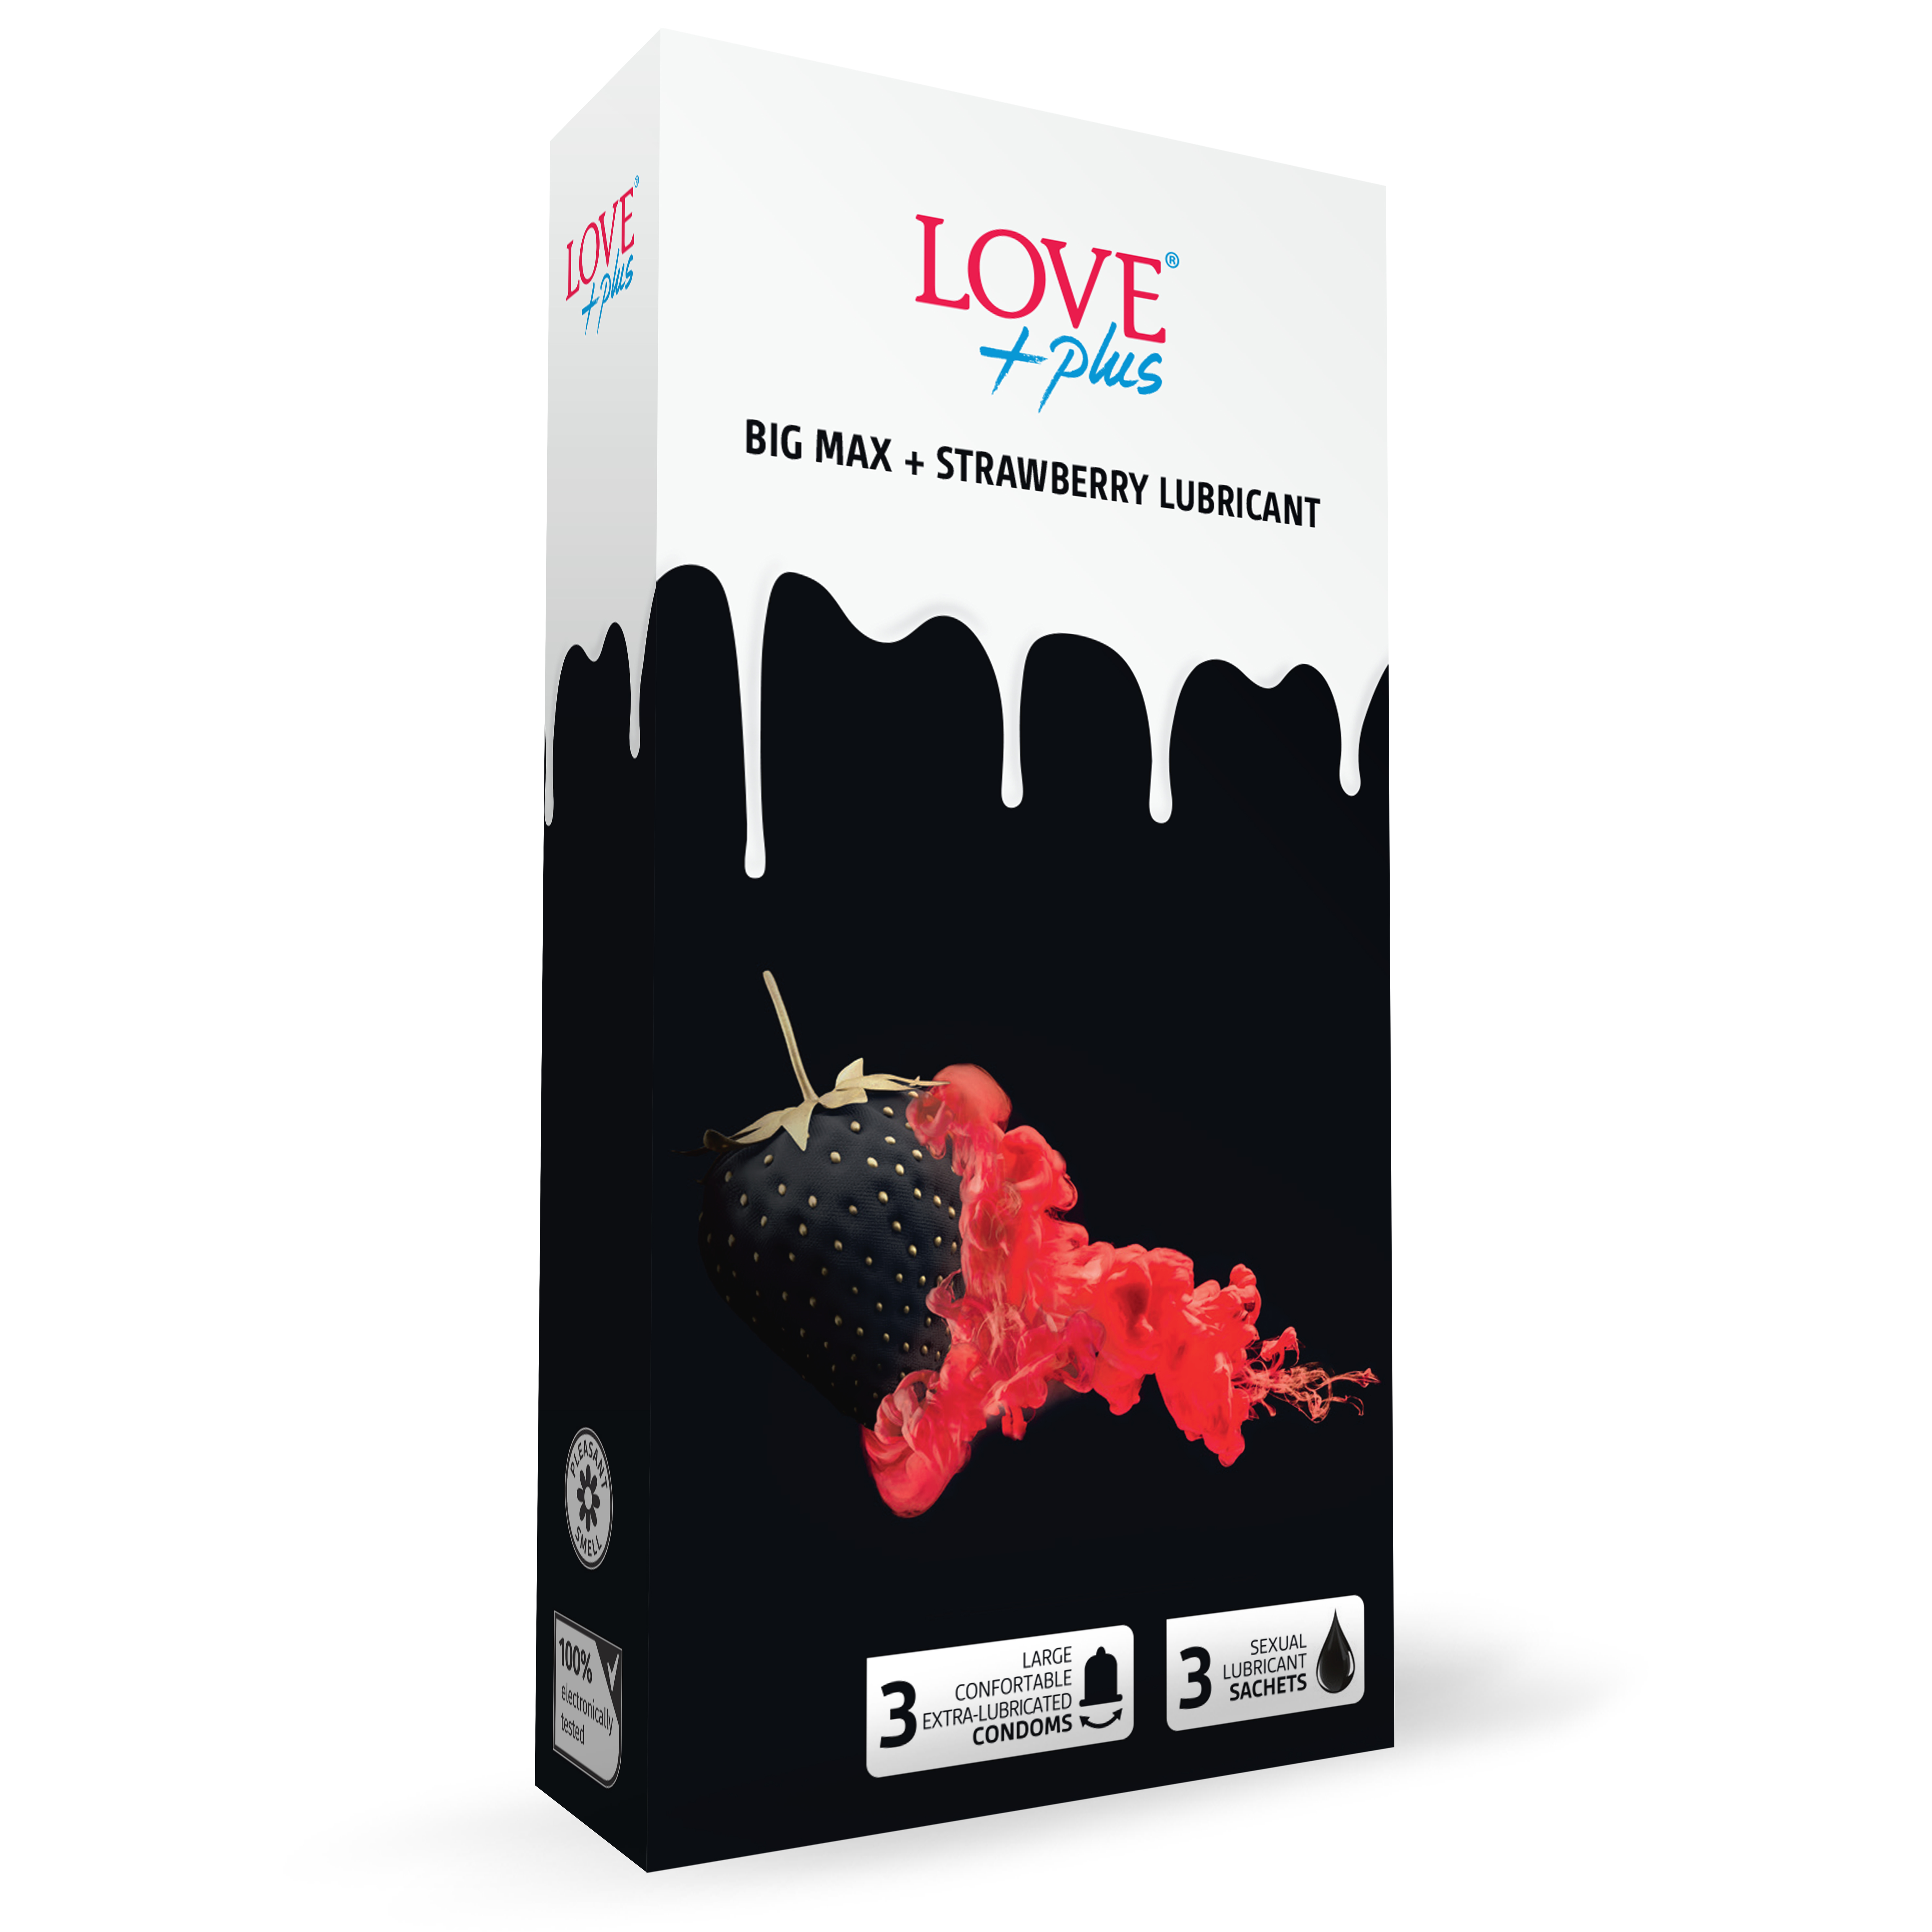 Pachet Prezervative Big Max + Lubrifiant Strawberry, 3+3 bucati, Love Plus